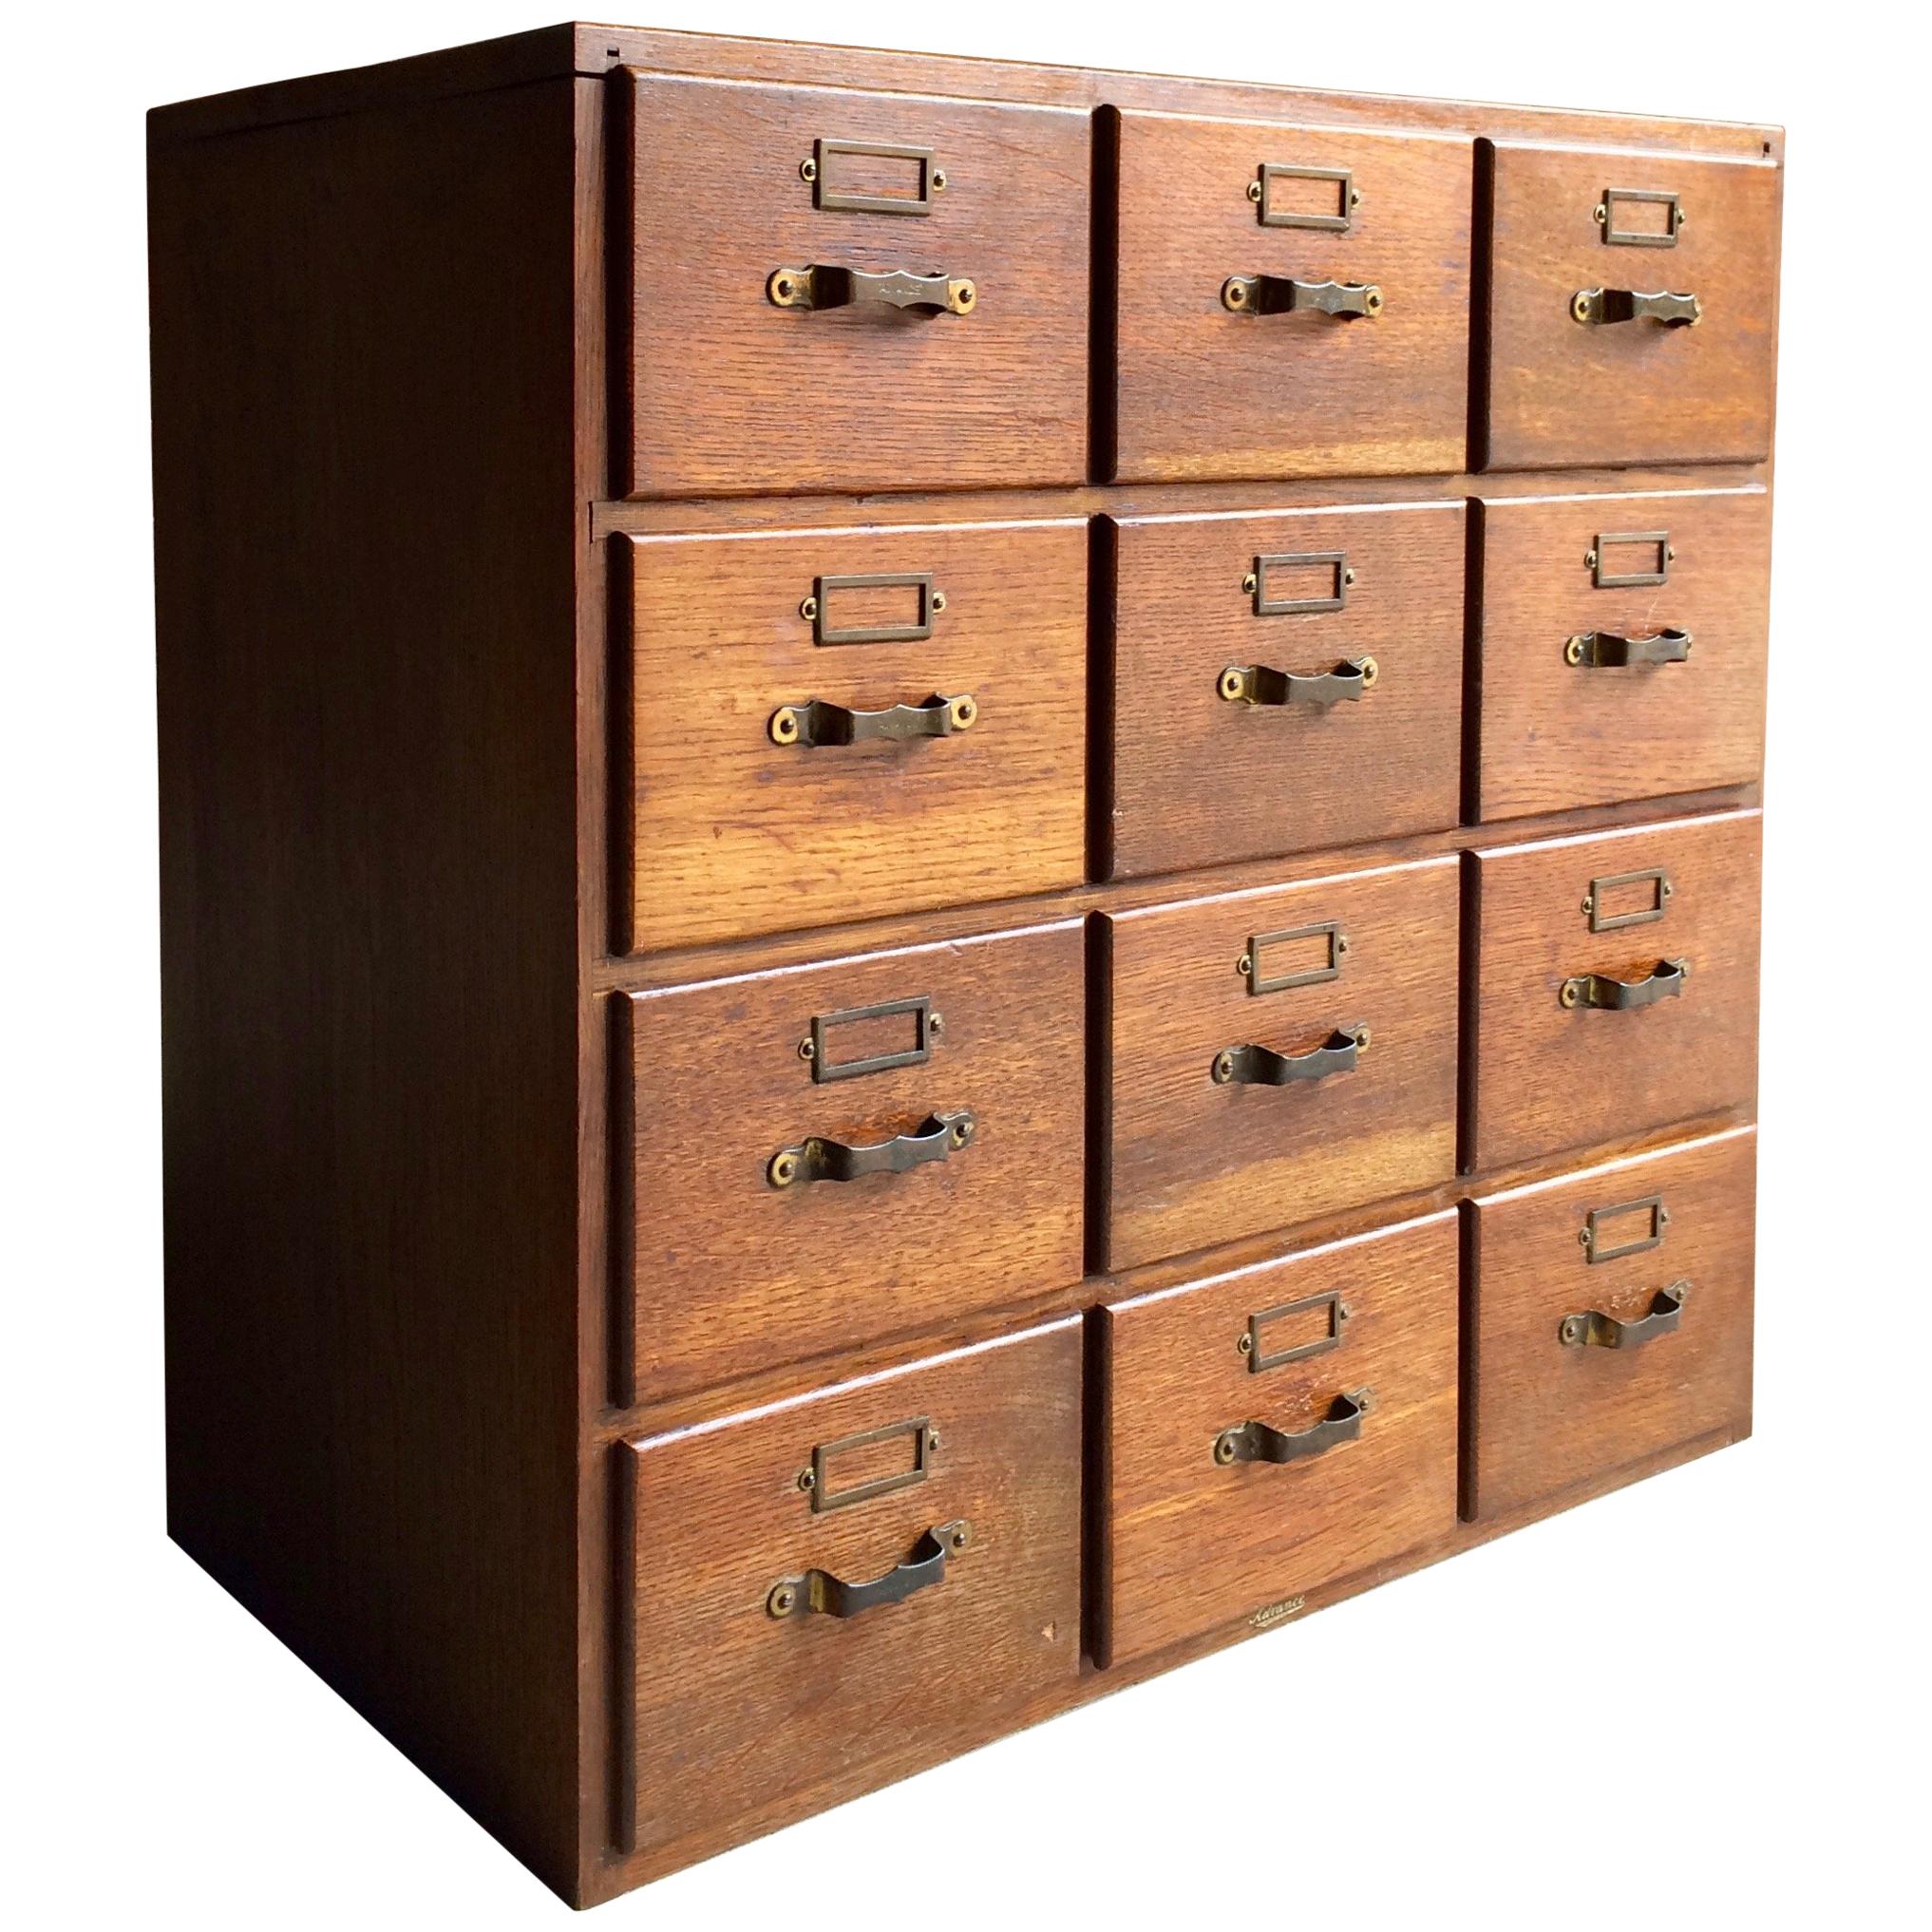 Advance Systems Haberdashery Oak Chest of Drawers Filing Cabinet Loft Style